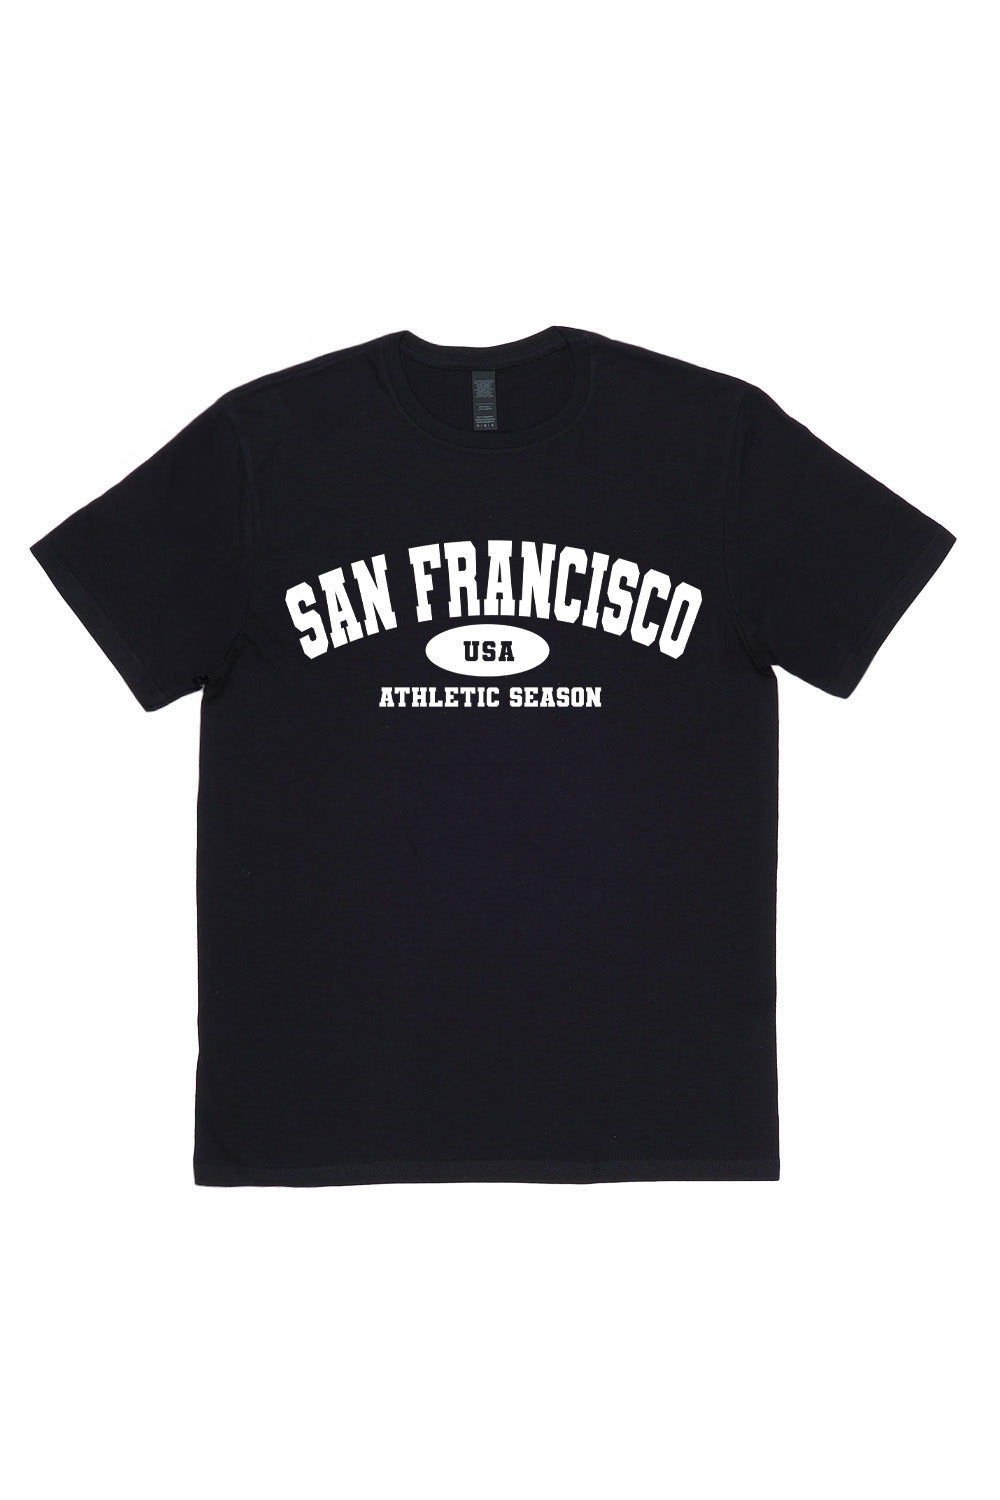 San Francisco T-Shirt in Black (Custom Packs)